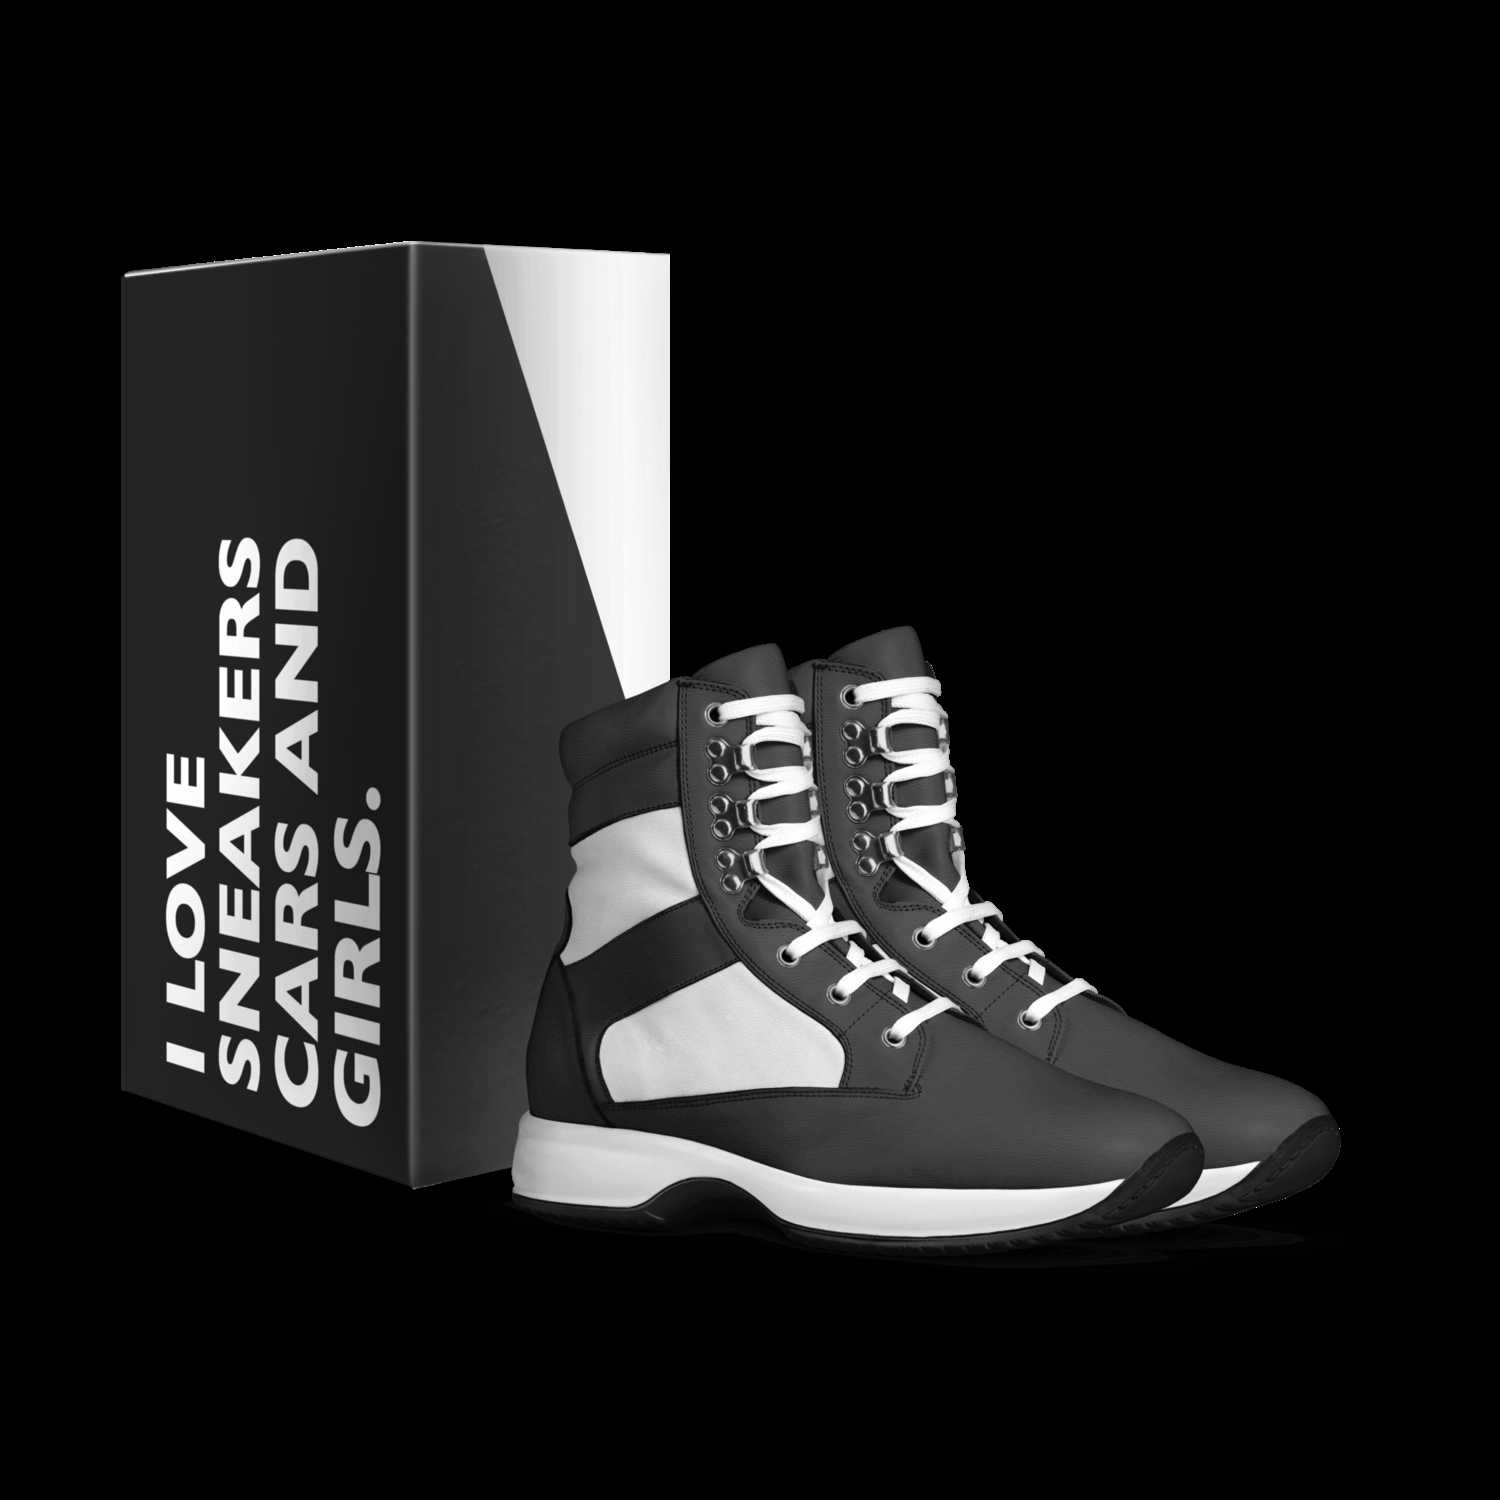 Jd | A Custom Shoe concept by Jorge Diaz